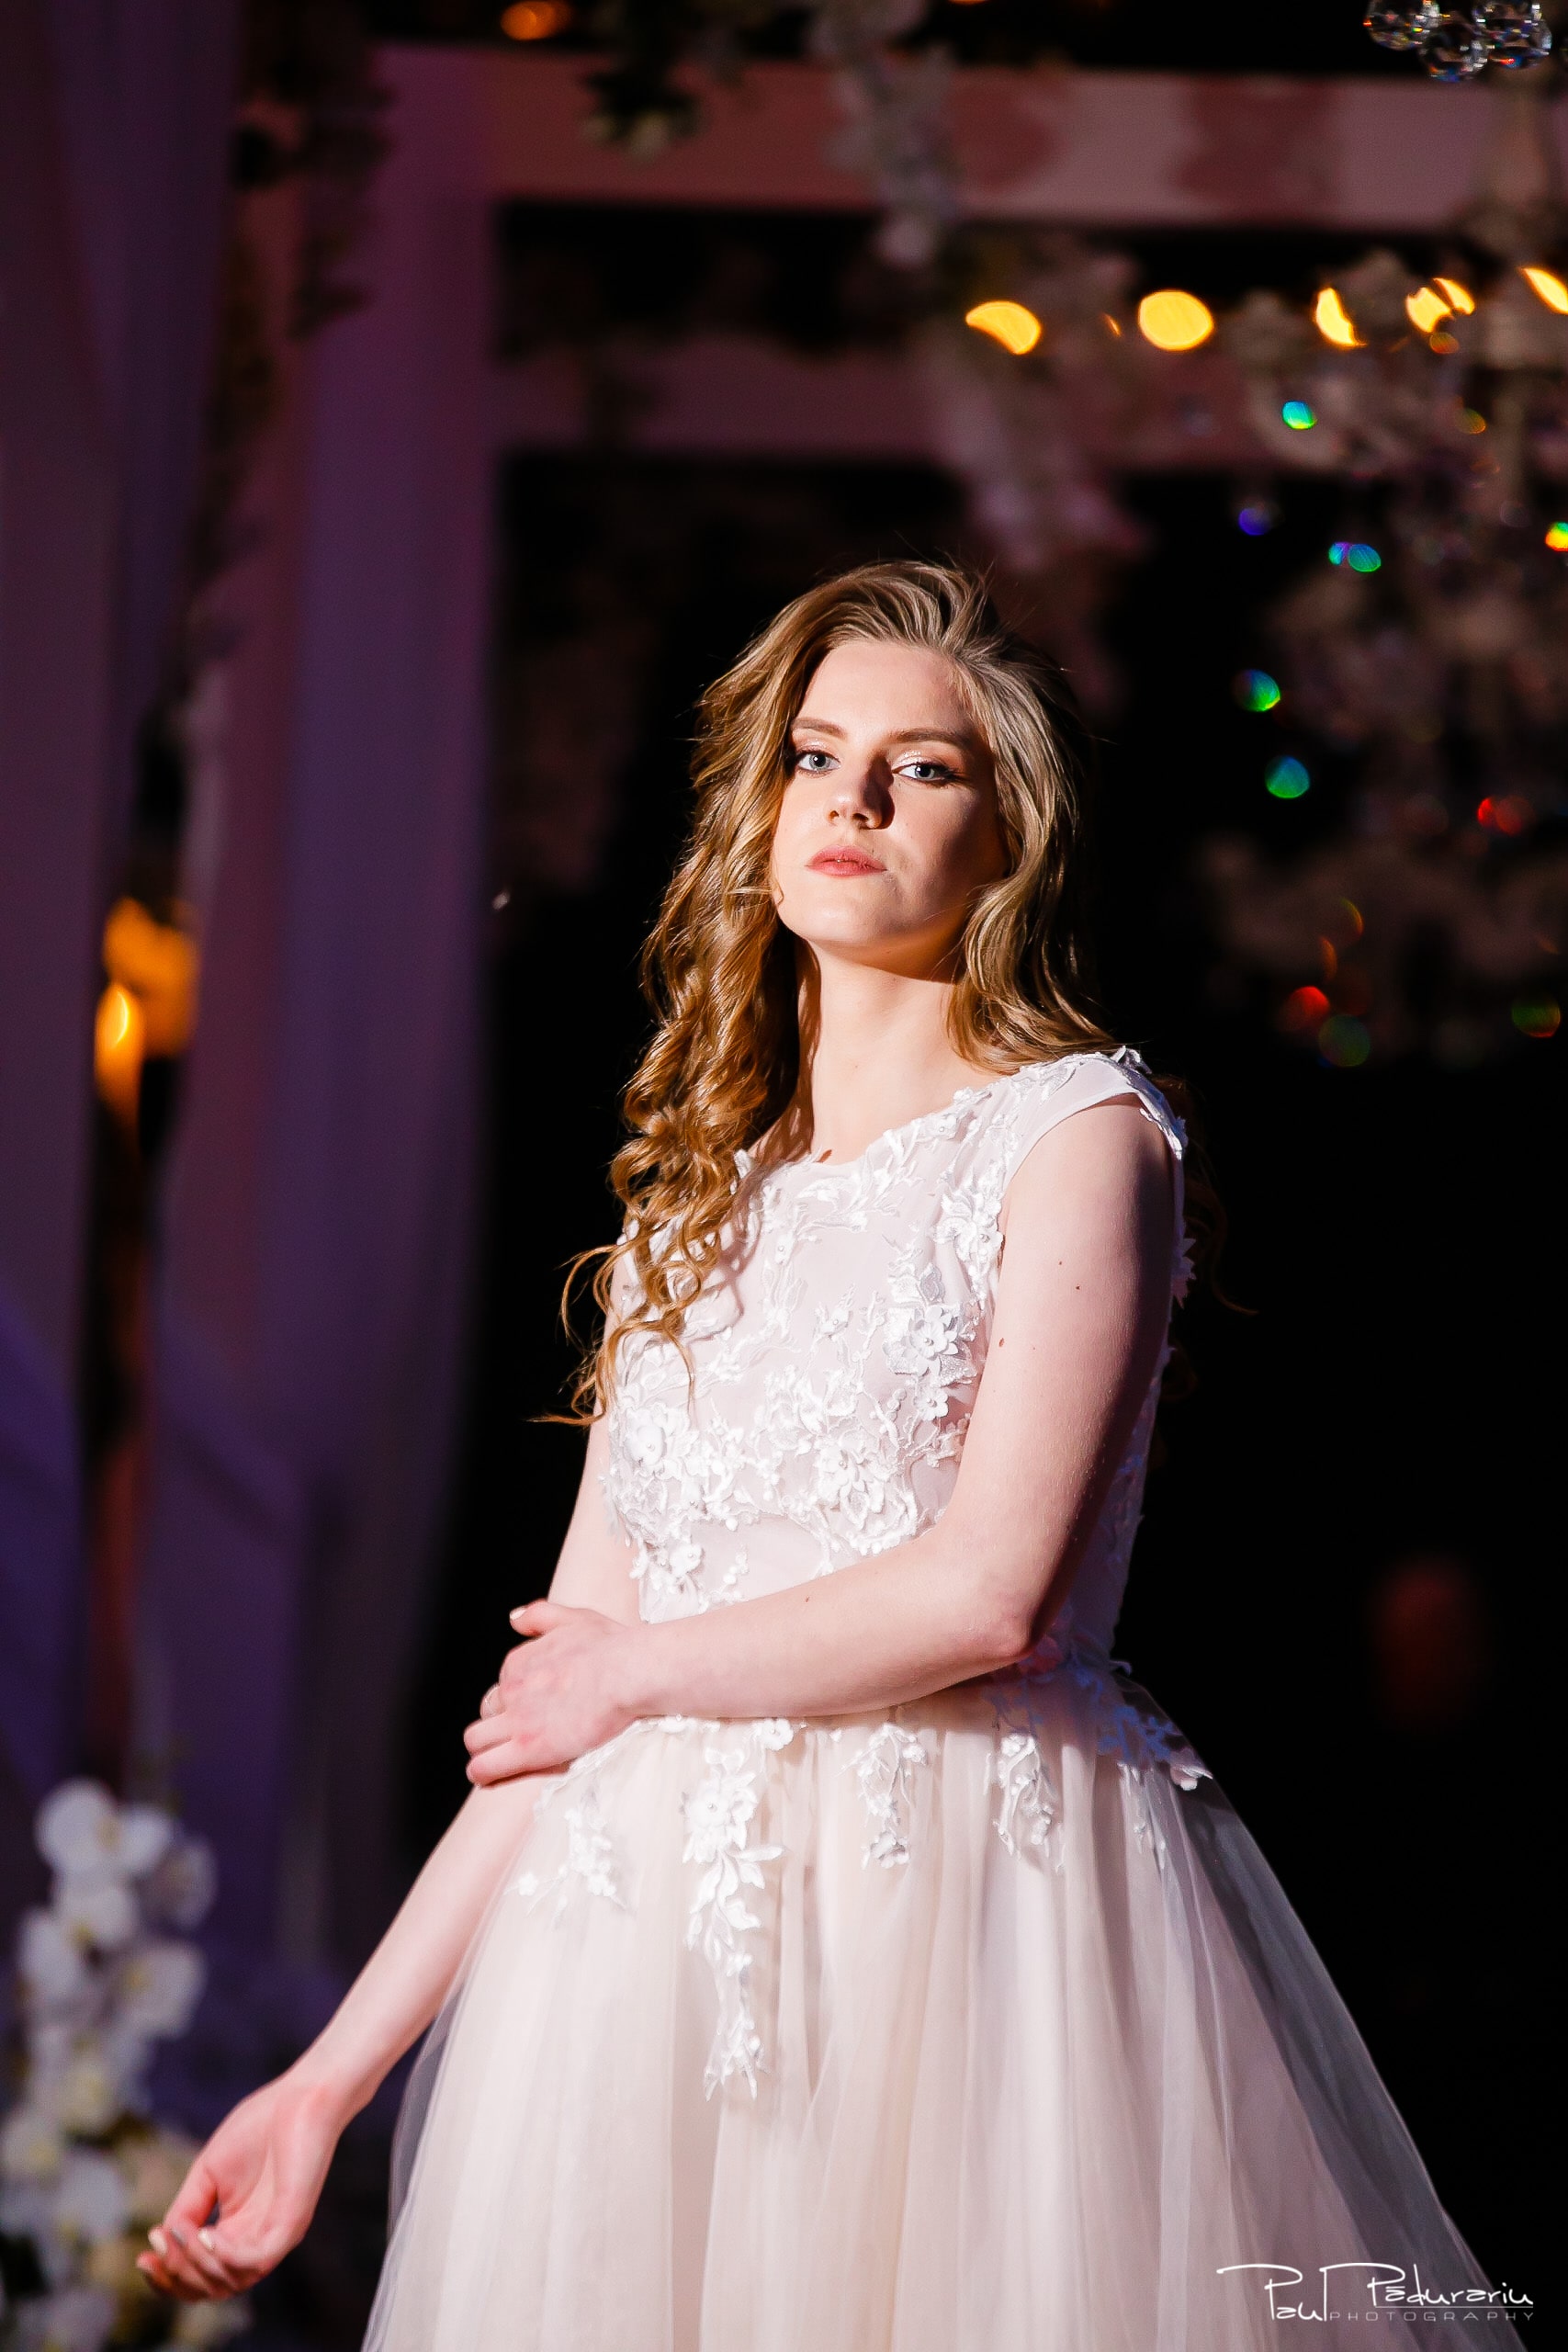 Modern Bride Edith Val colectie rochie mireasa 2019 - fotograf profesionist iasi paul padurariu | nunta iasi 23